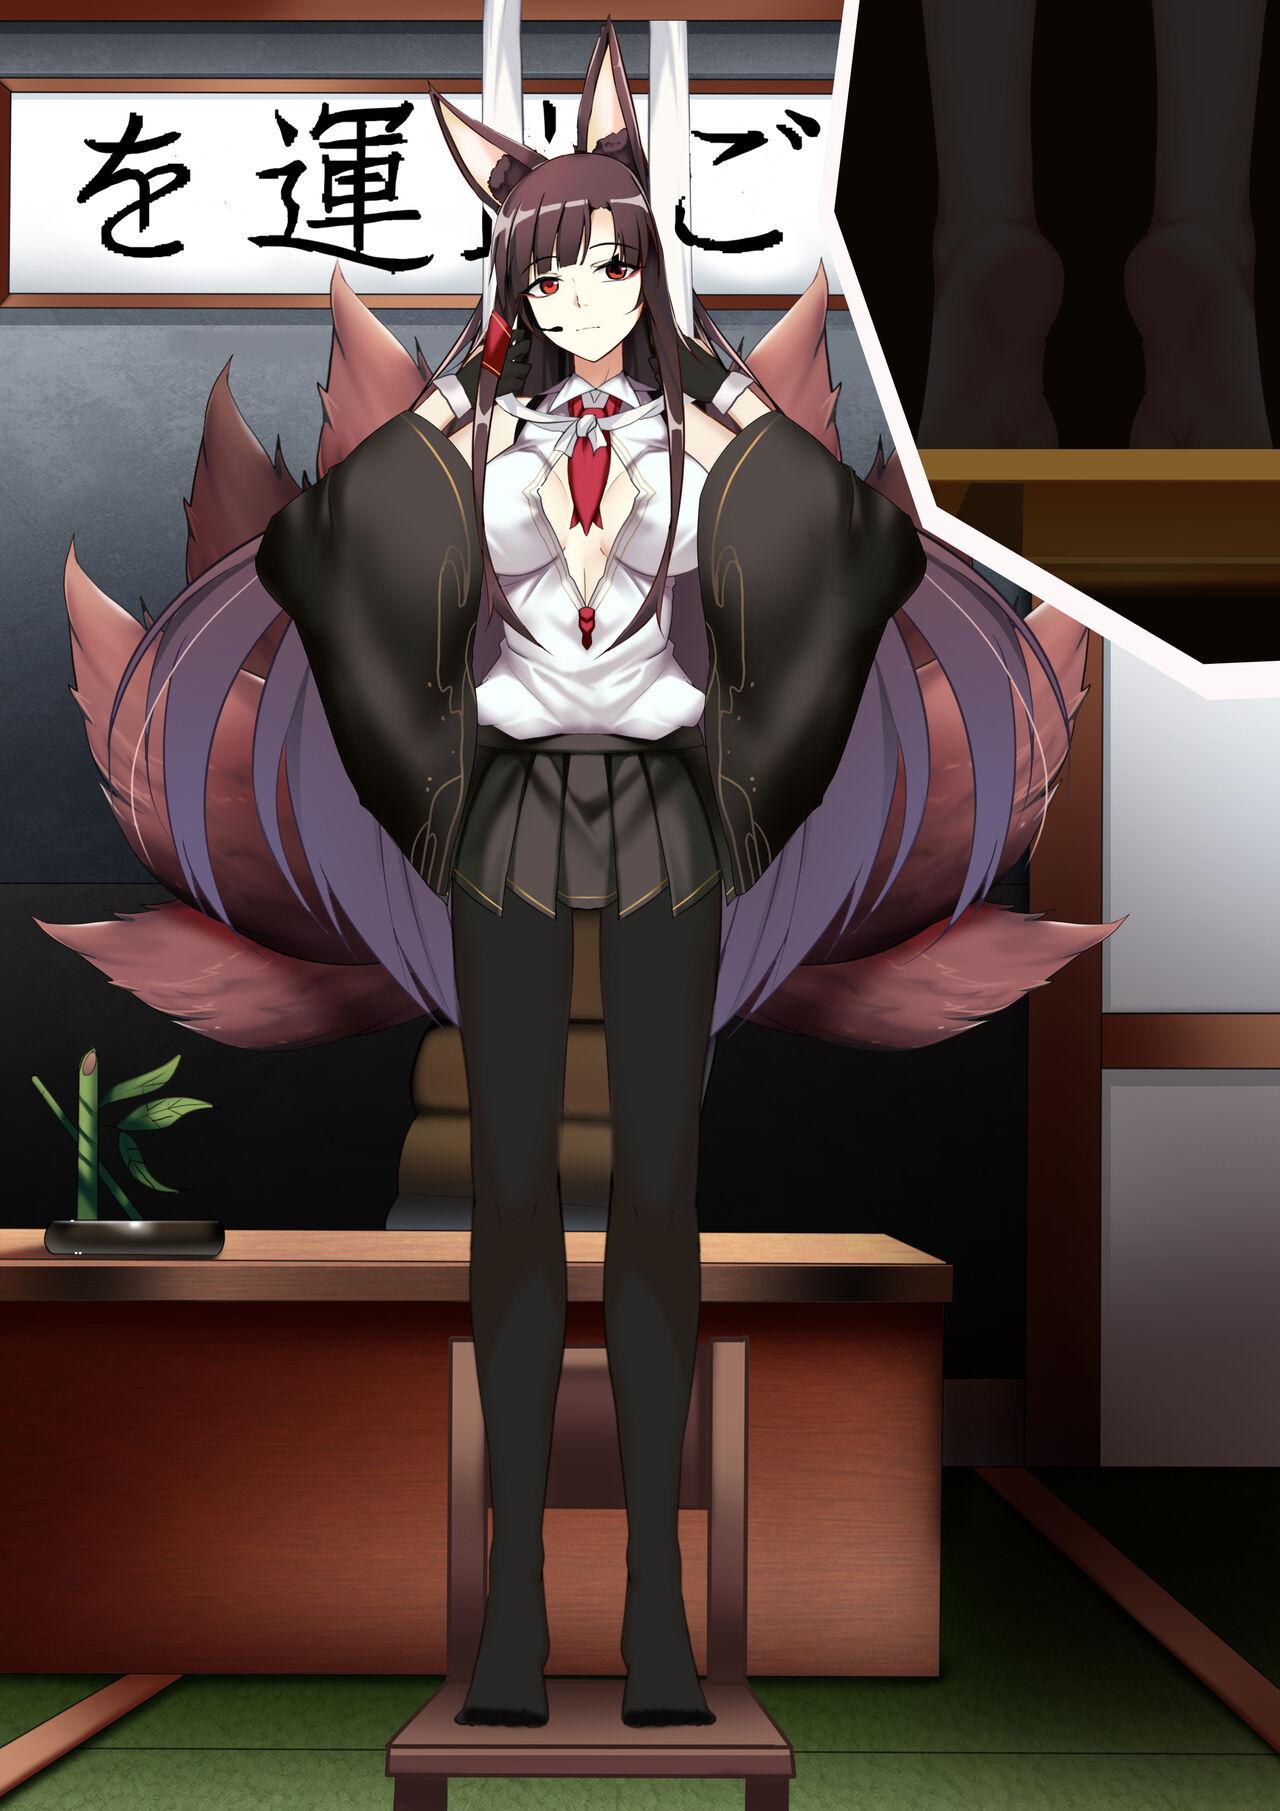 Akagi hanged herself in her office 28